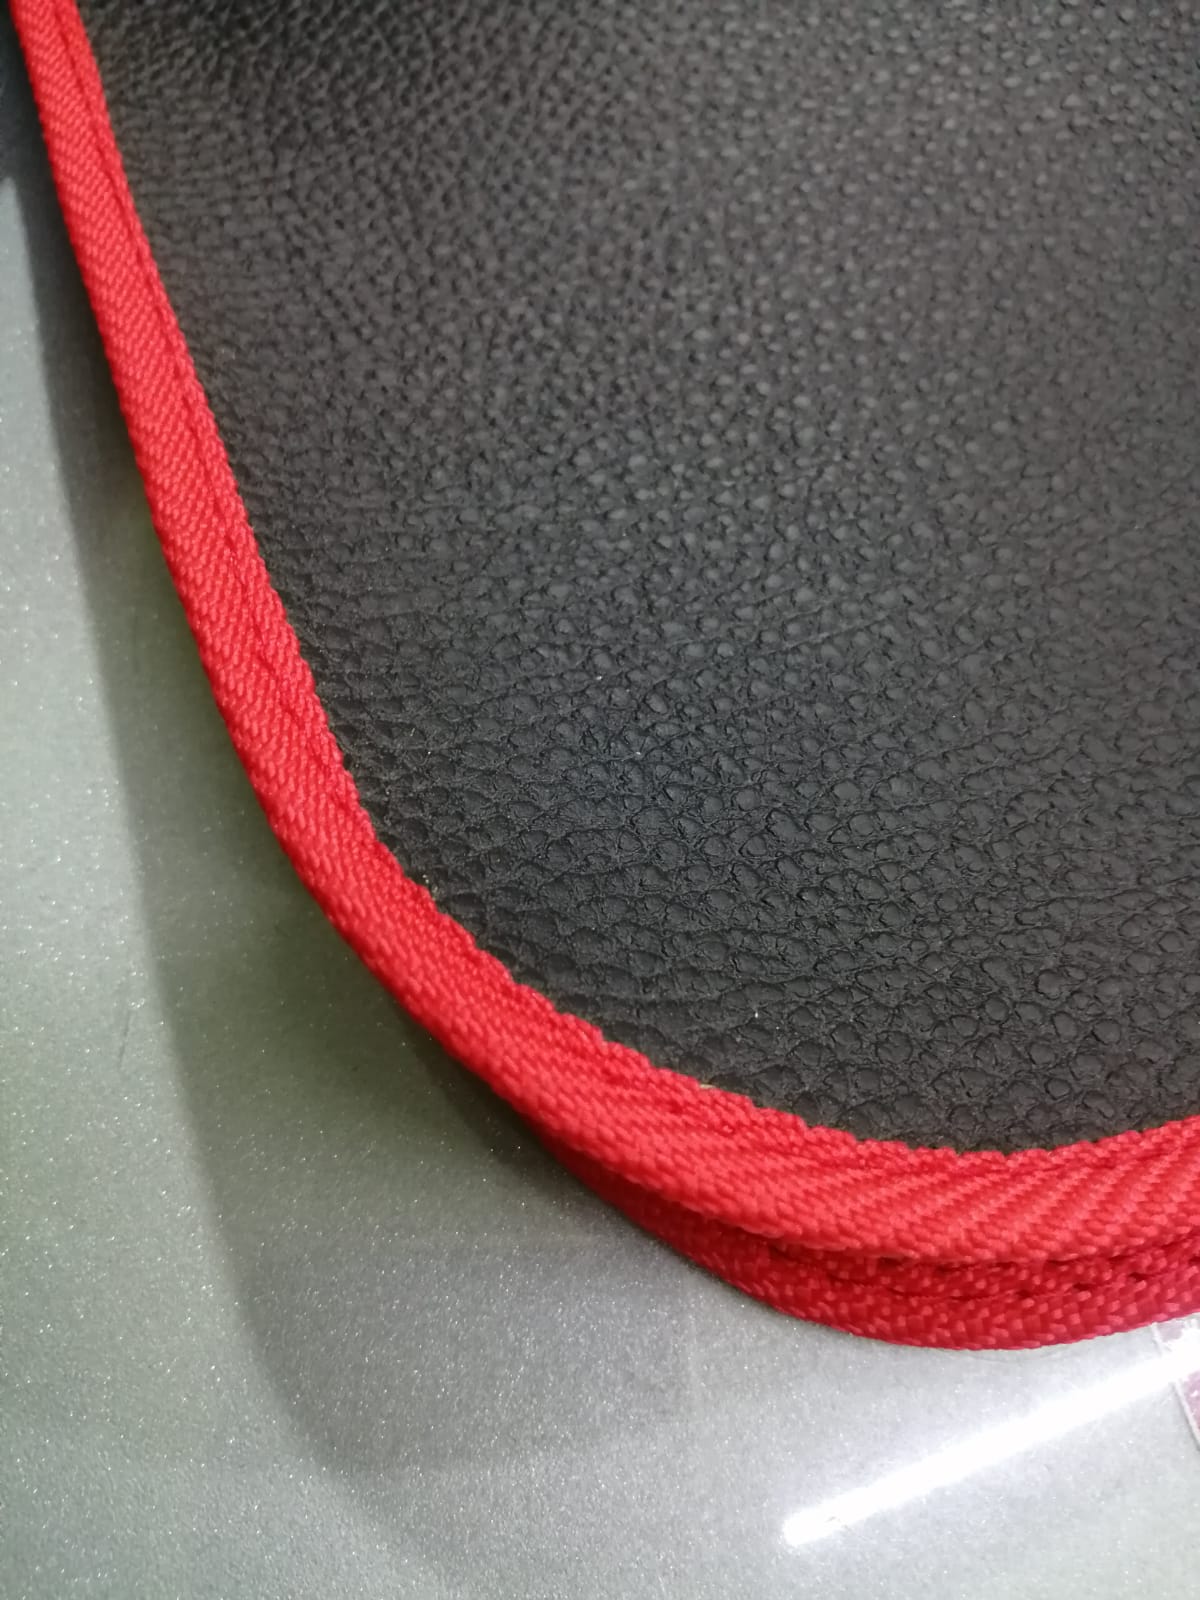 Honda Type-R Universal PVC Leather Floor Mats Set of 5